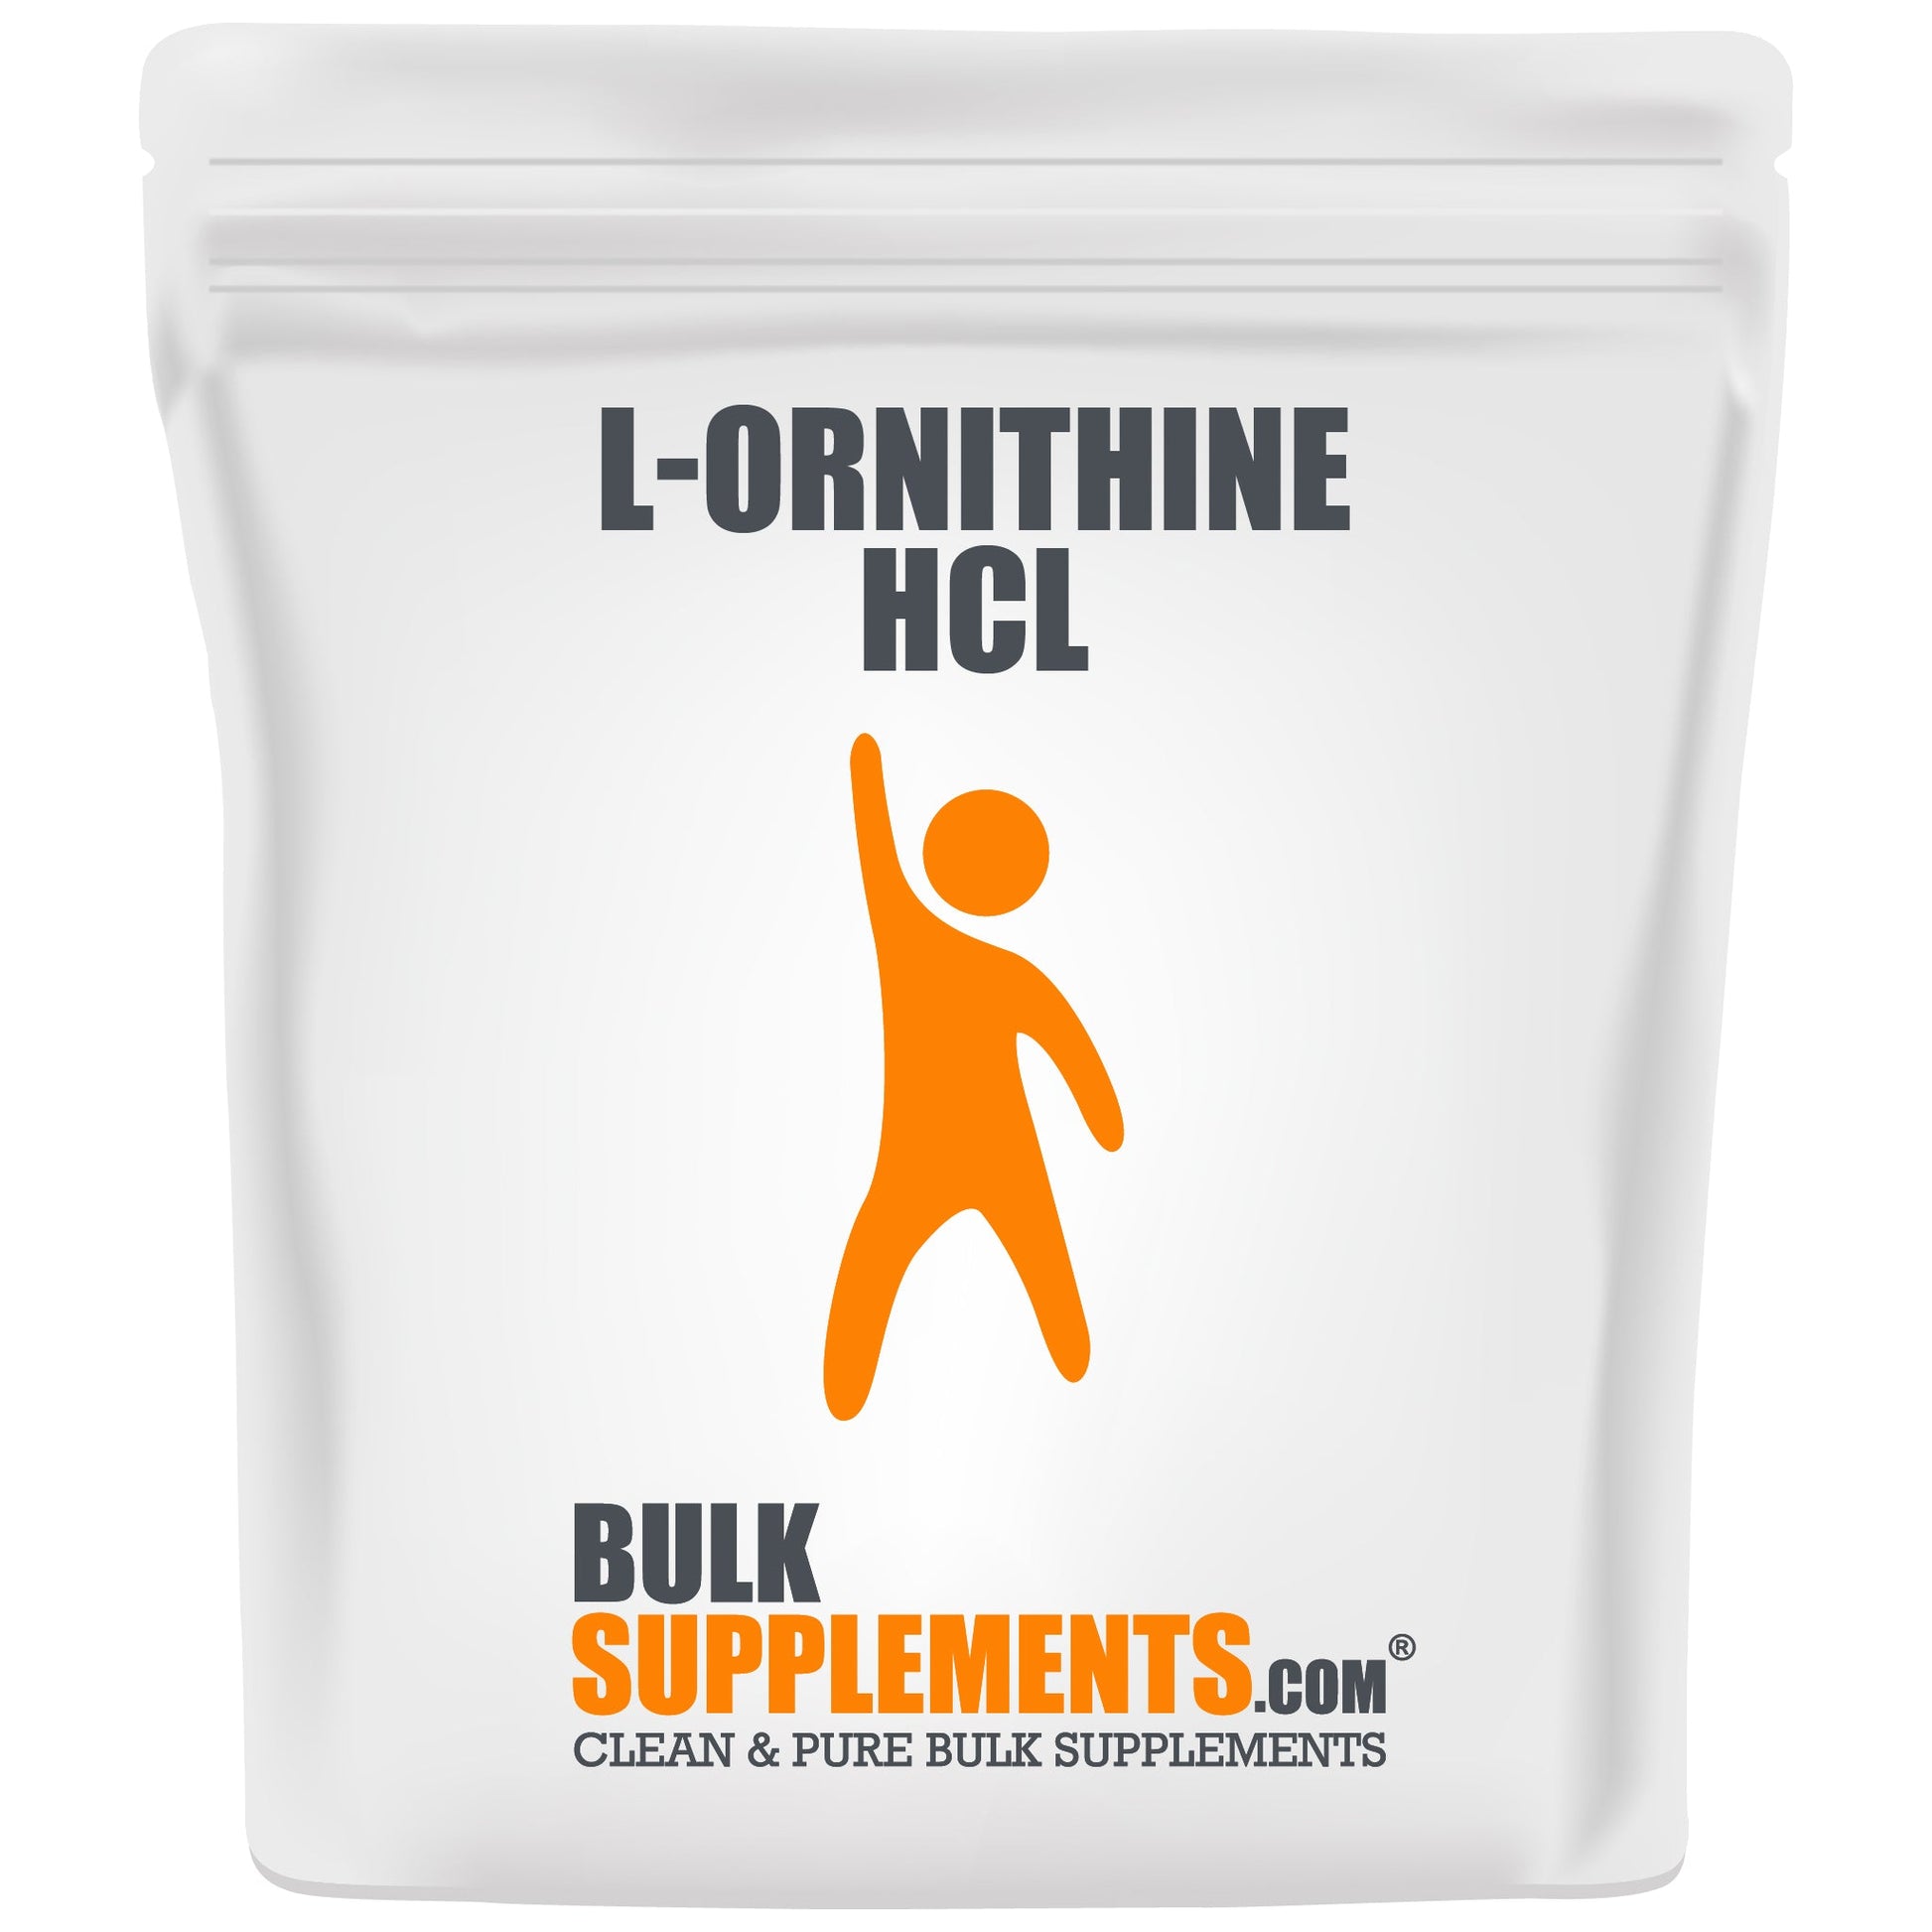 L-Ornithine HCl